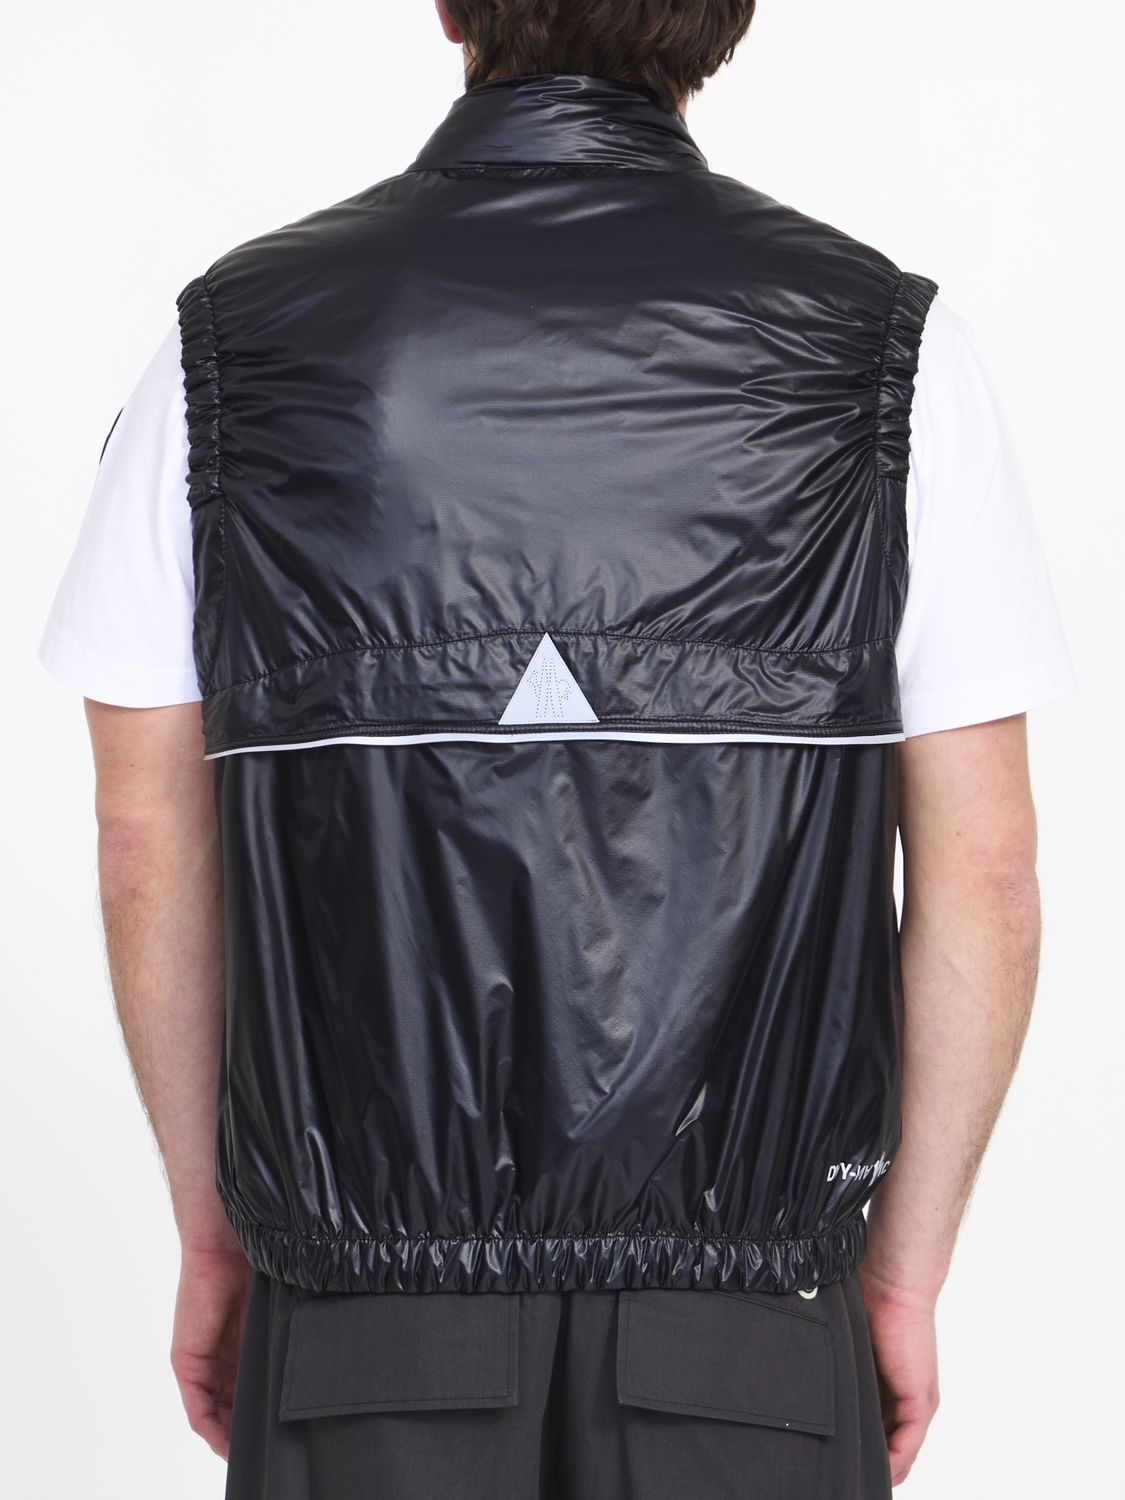 Black Down Vest for Men with Reflective Details